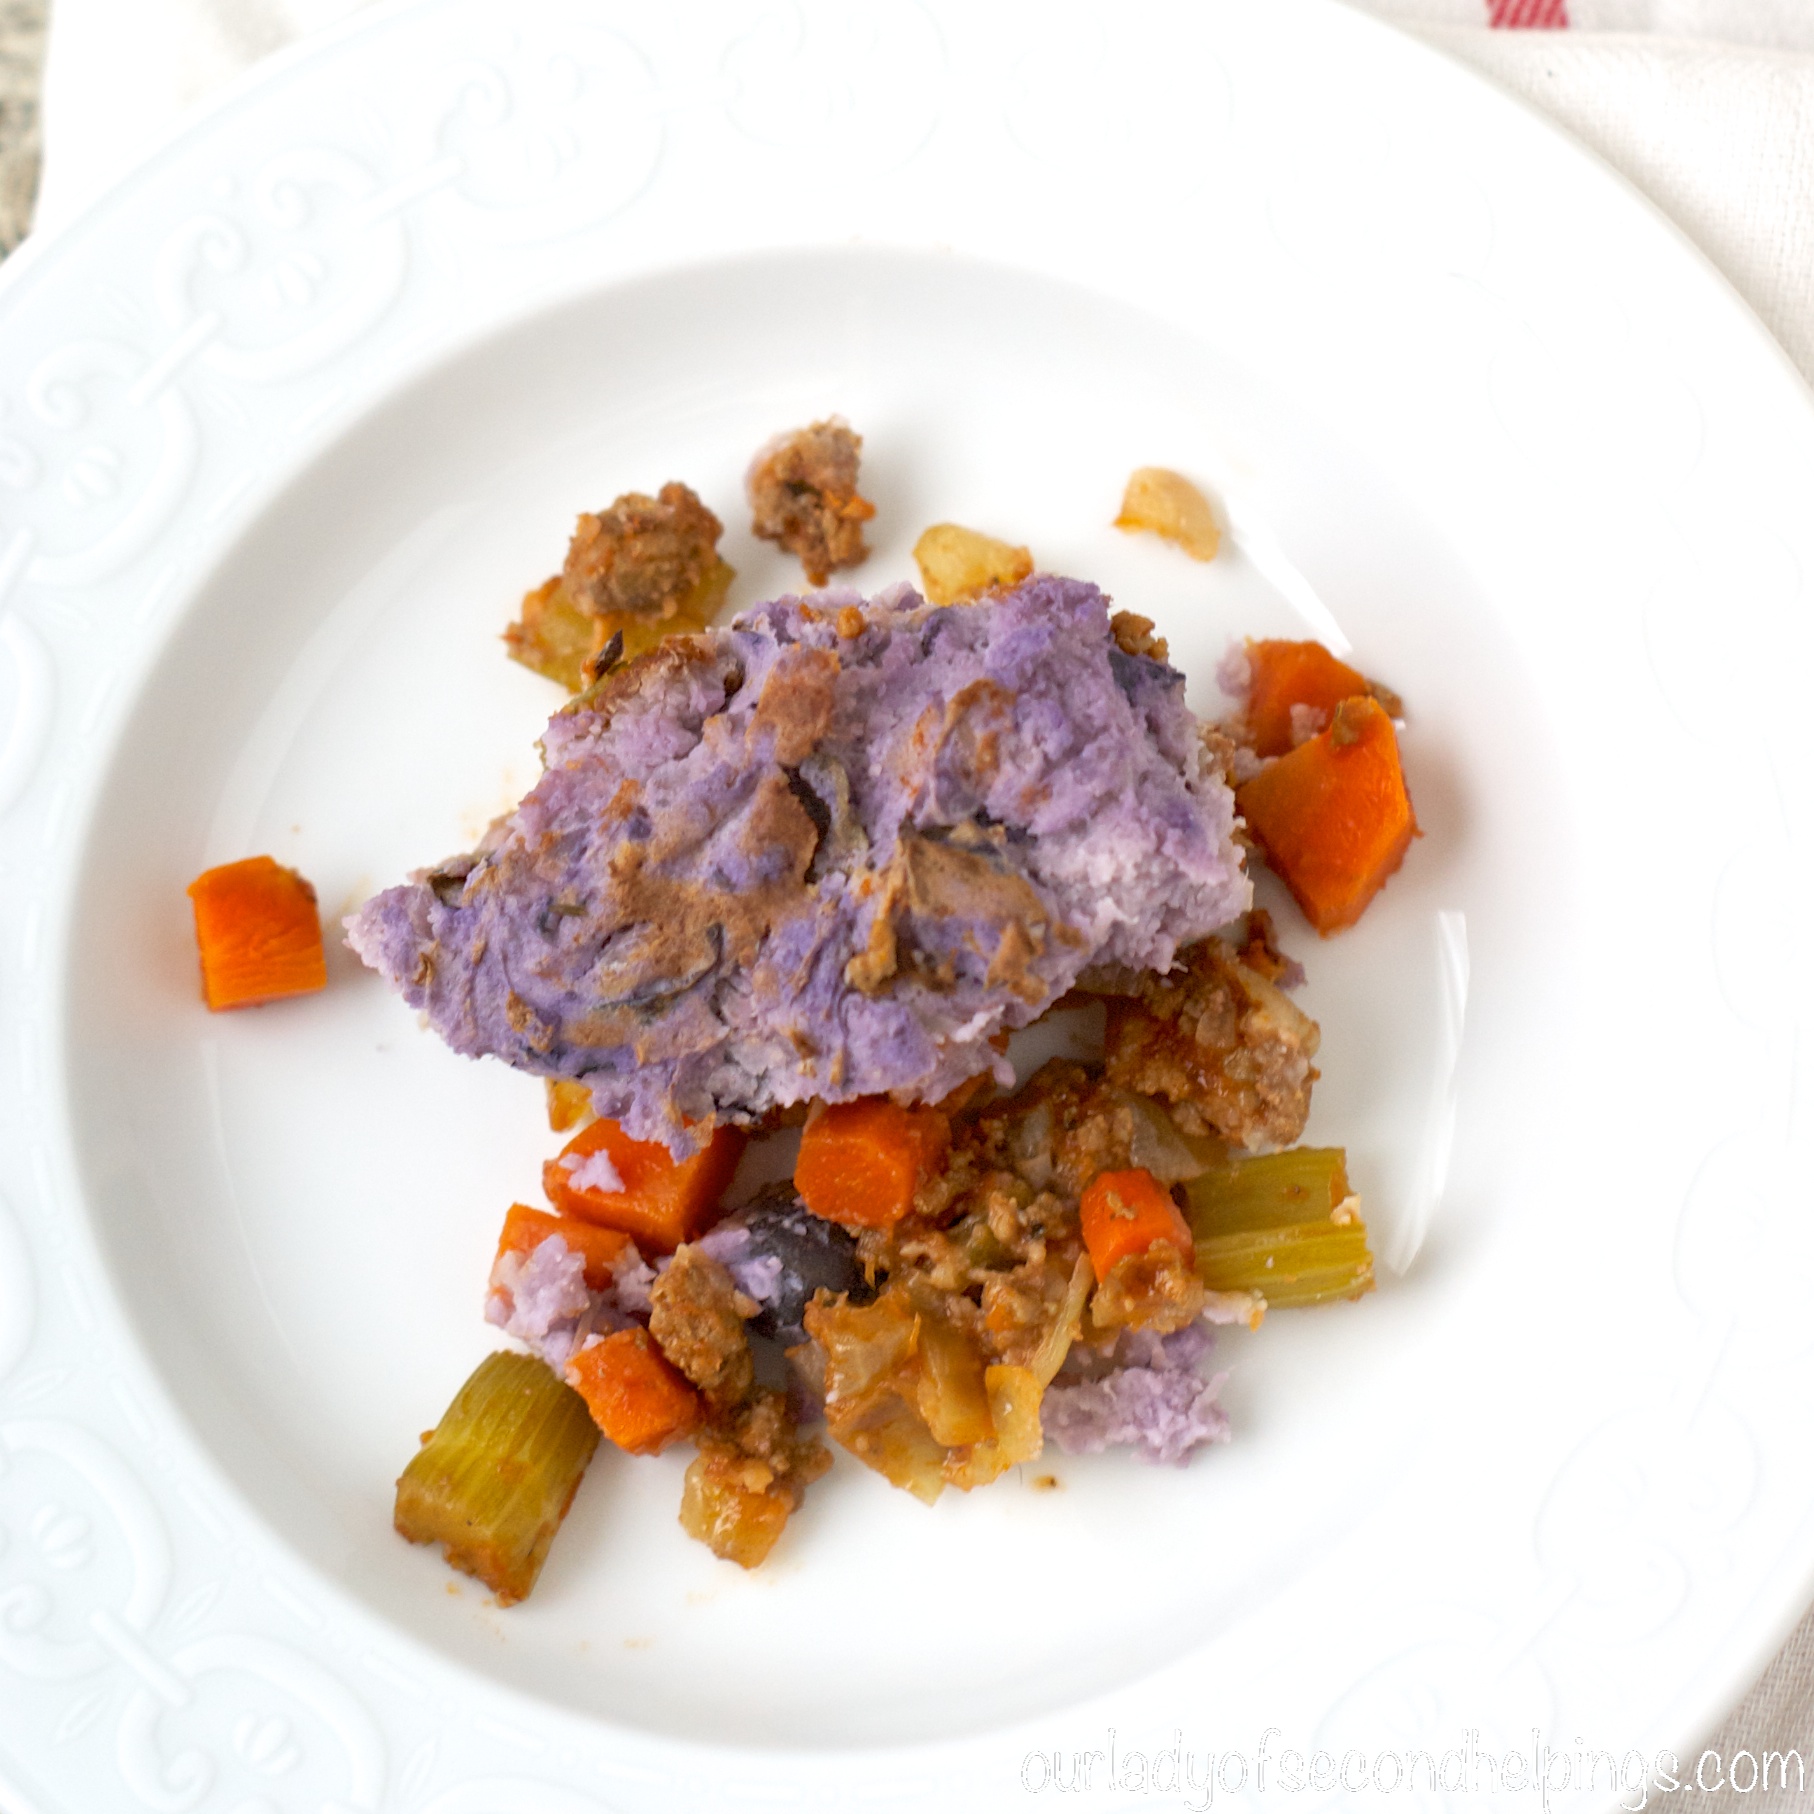 shepherds pie with purple potatoes